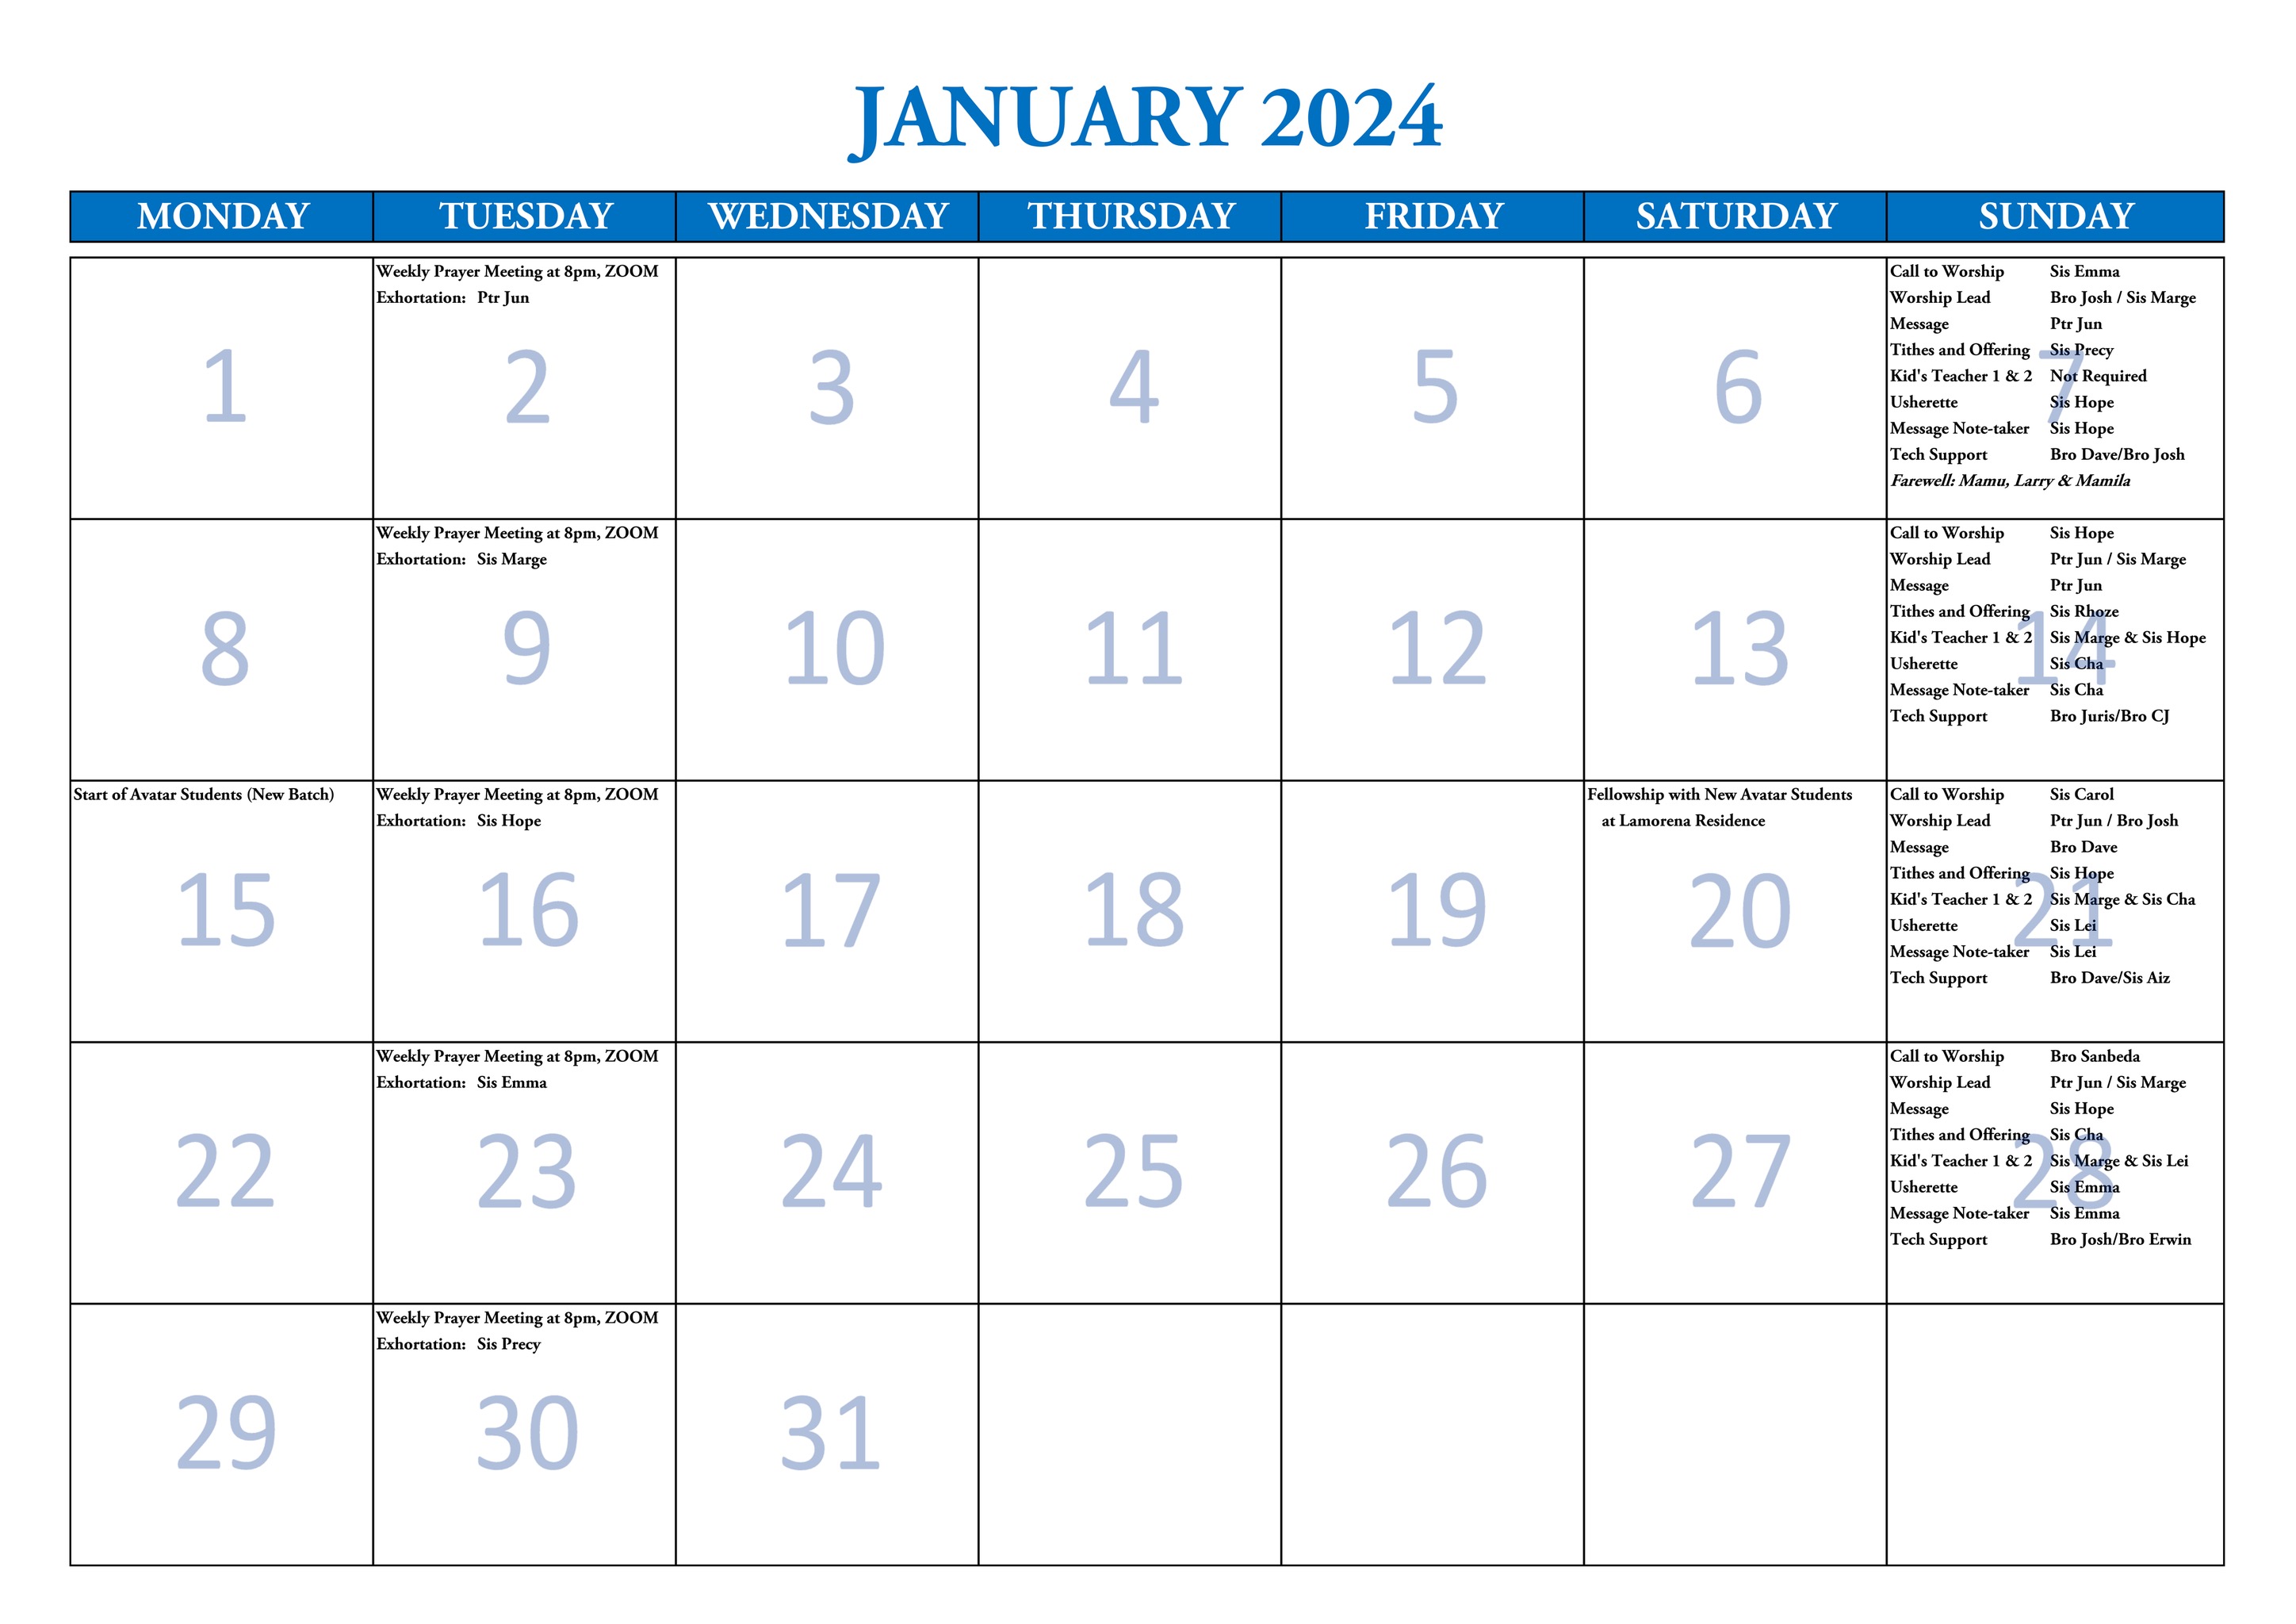 January 2024 JIL New Plymouth Calendar of Activities